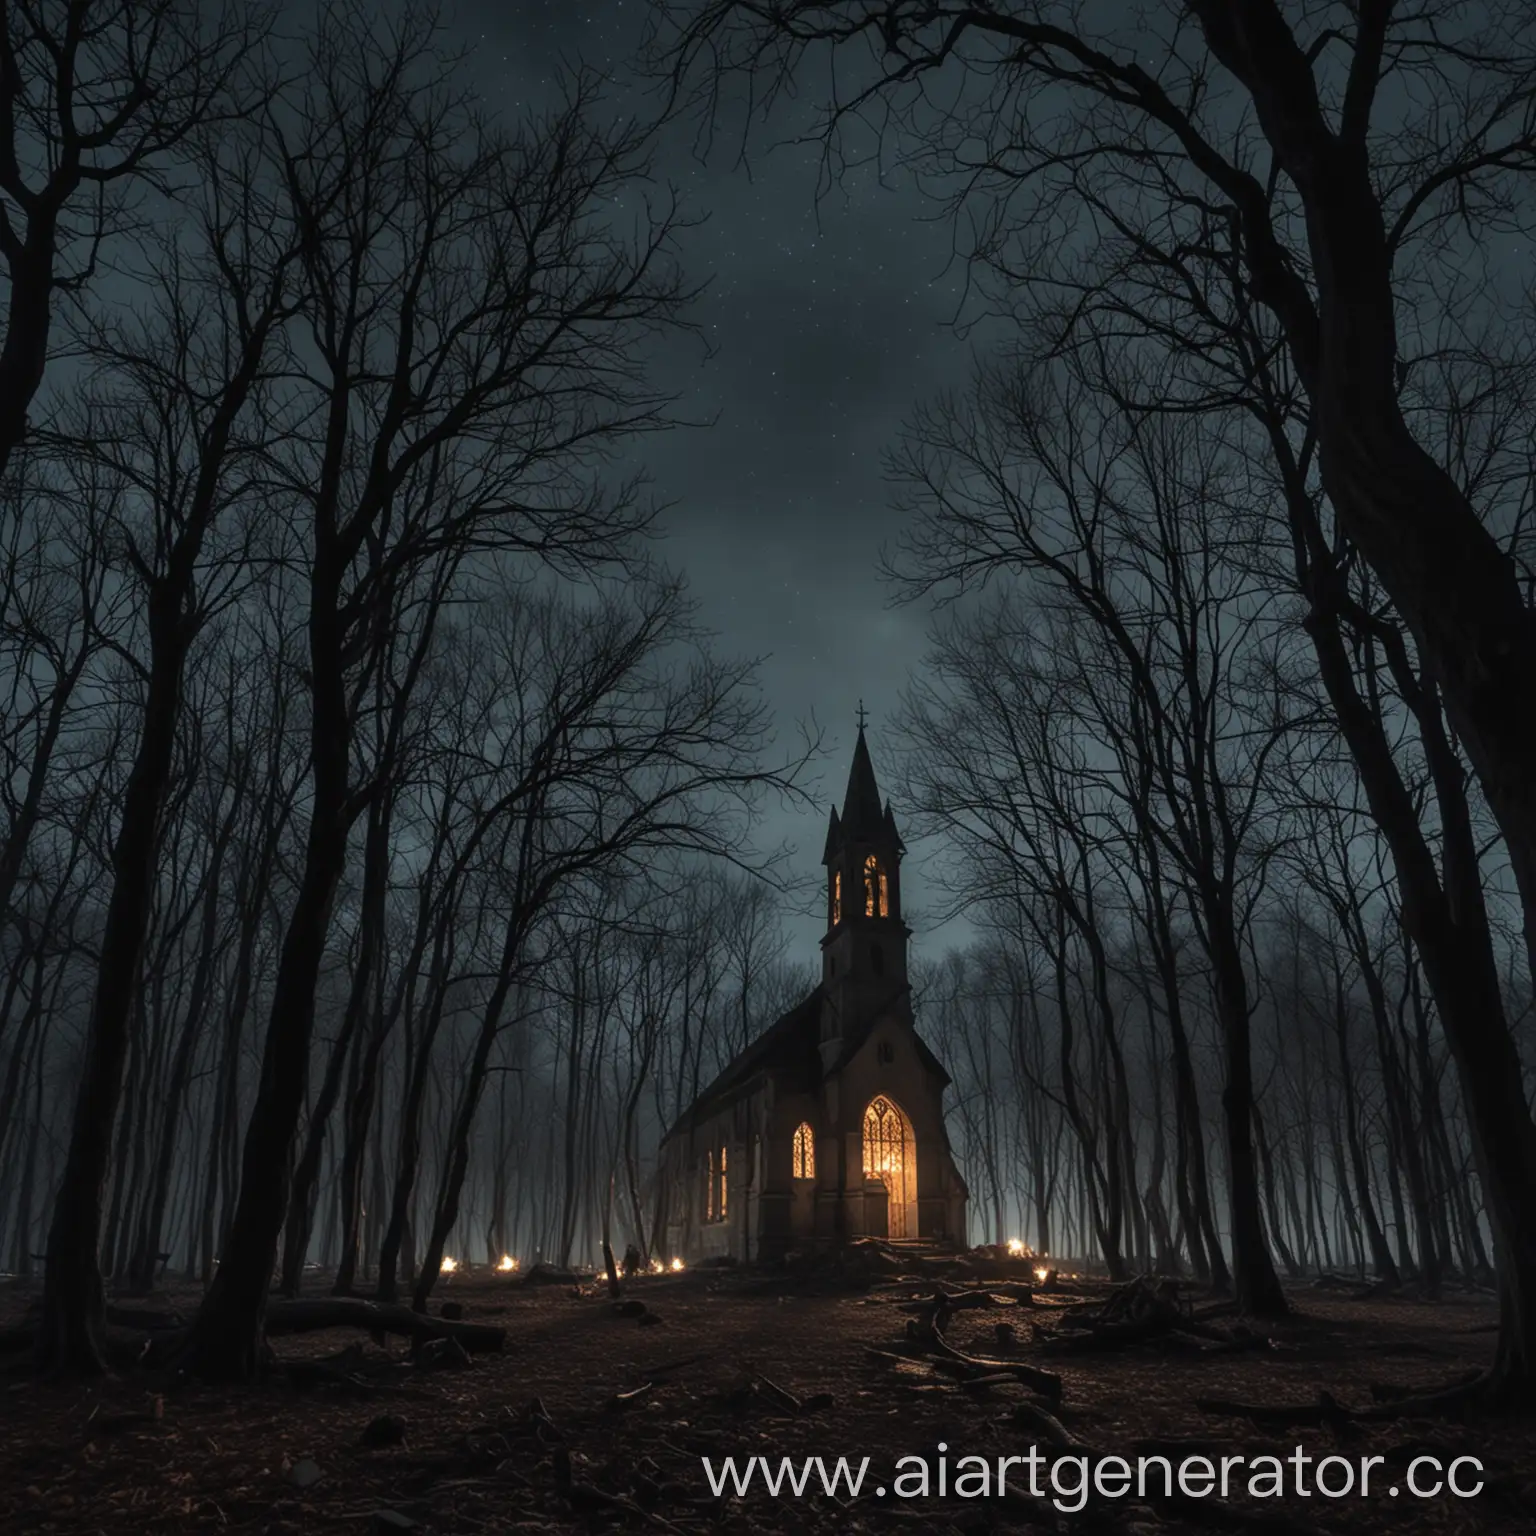 Eerie-Forest-Haunting-Scene-of-Burnt-Church-in-the-Dark-Night